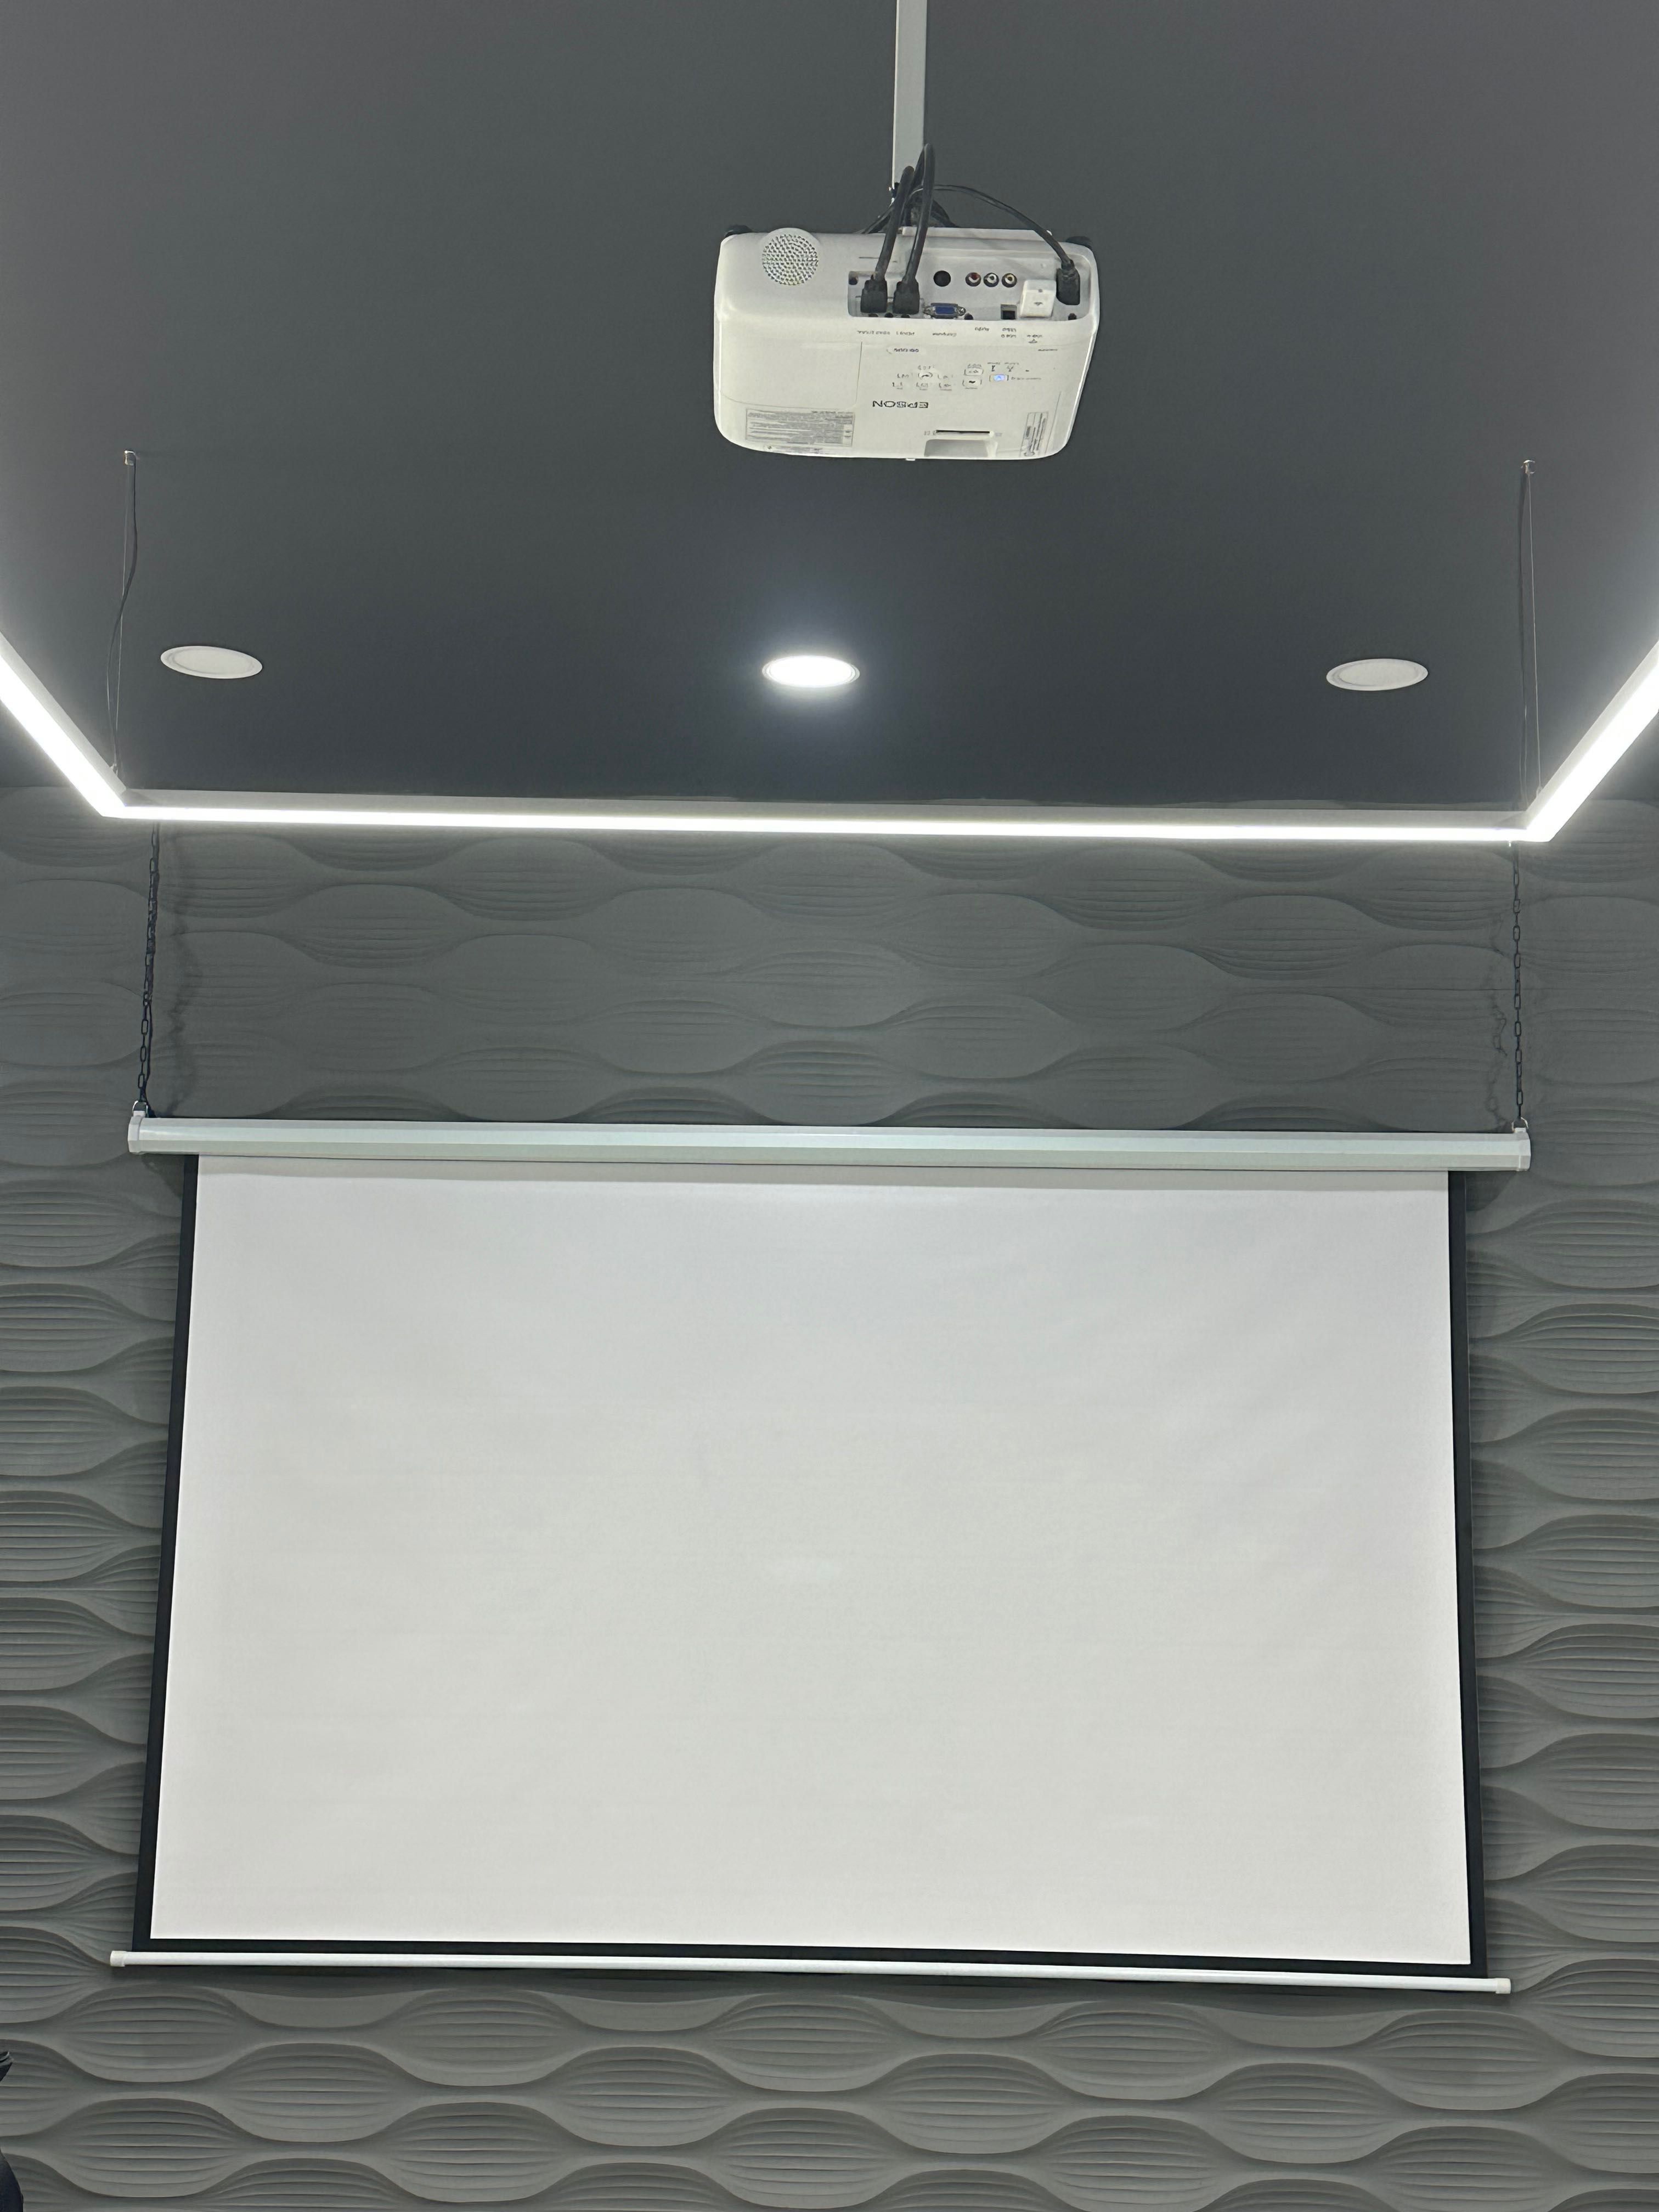 Проектор Epson EB-U05 + экран автоматический 2,4х1,5